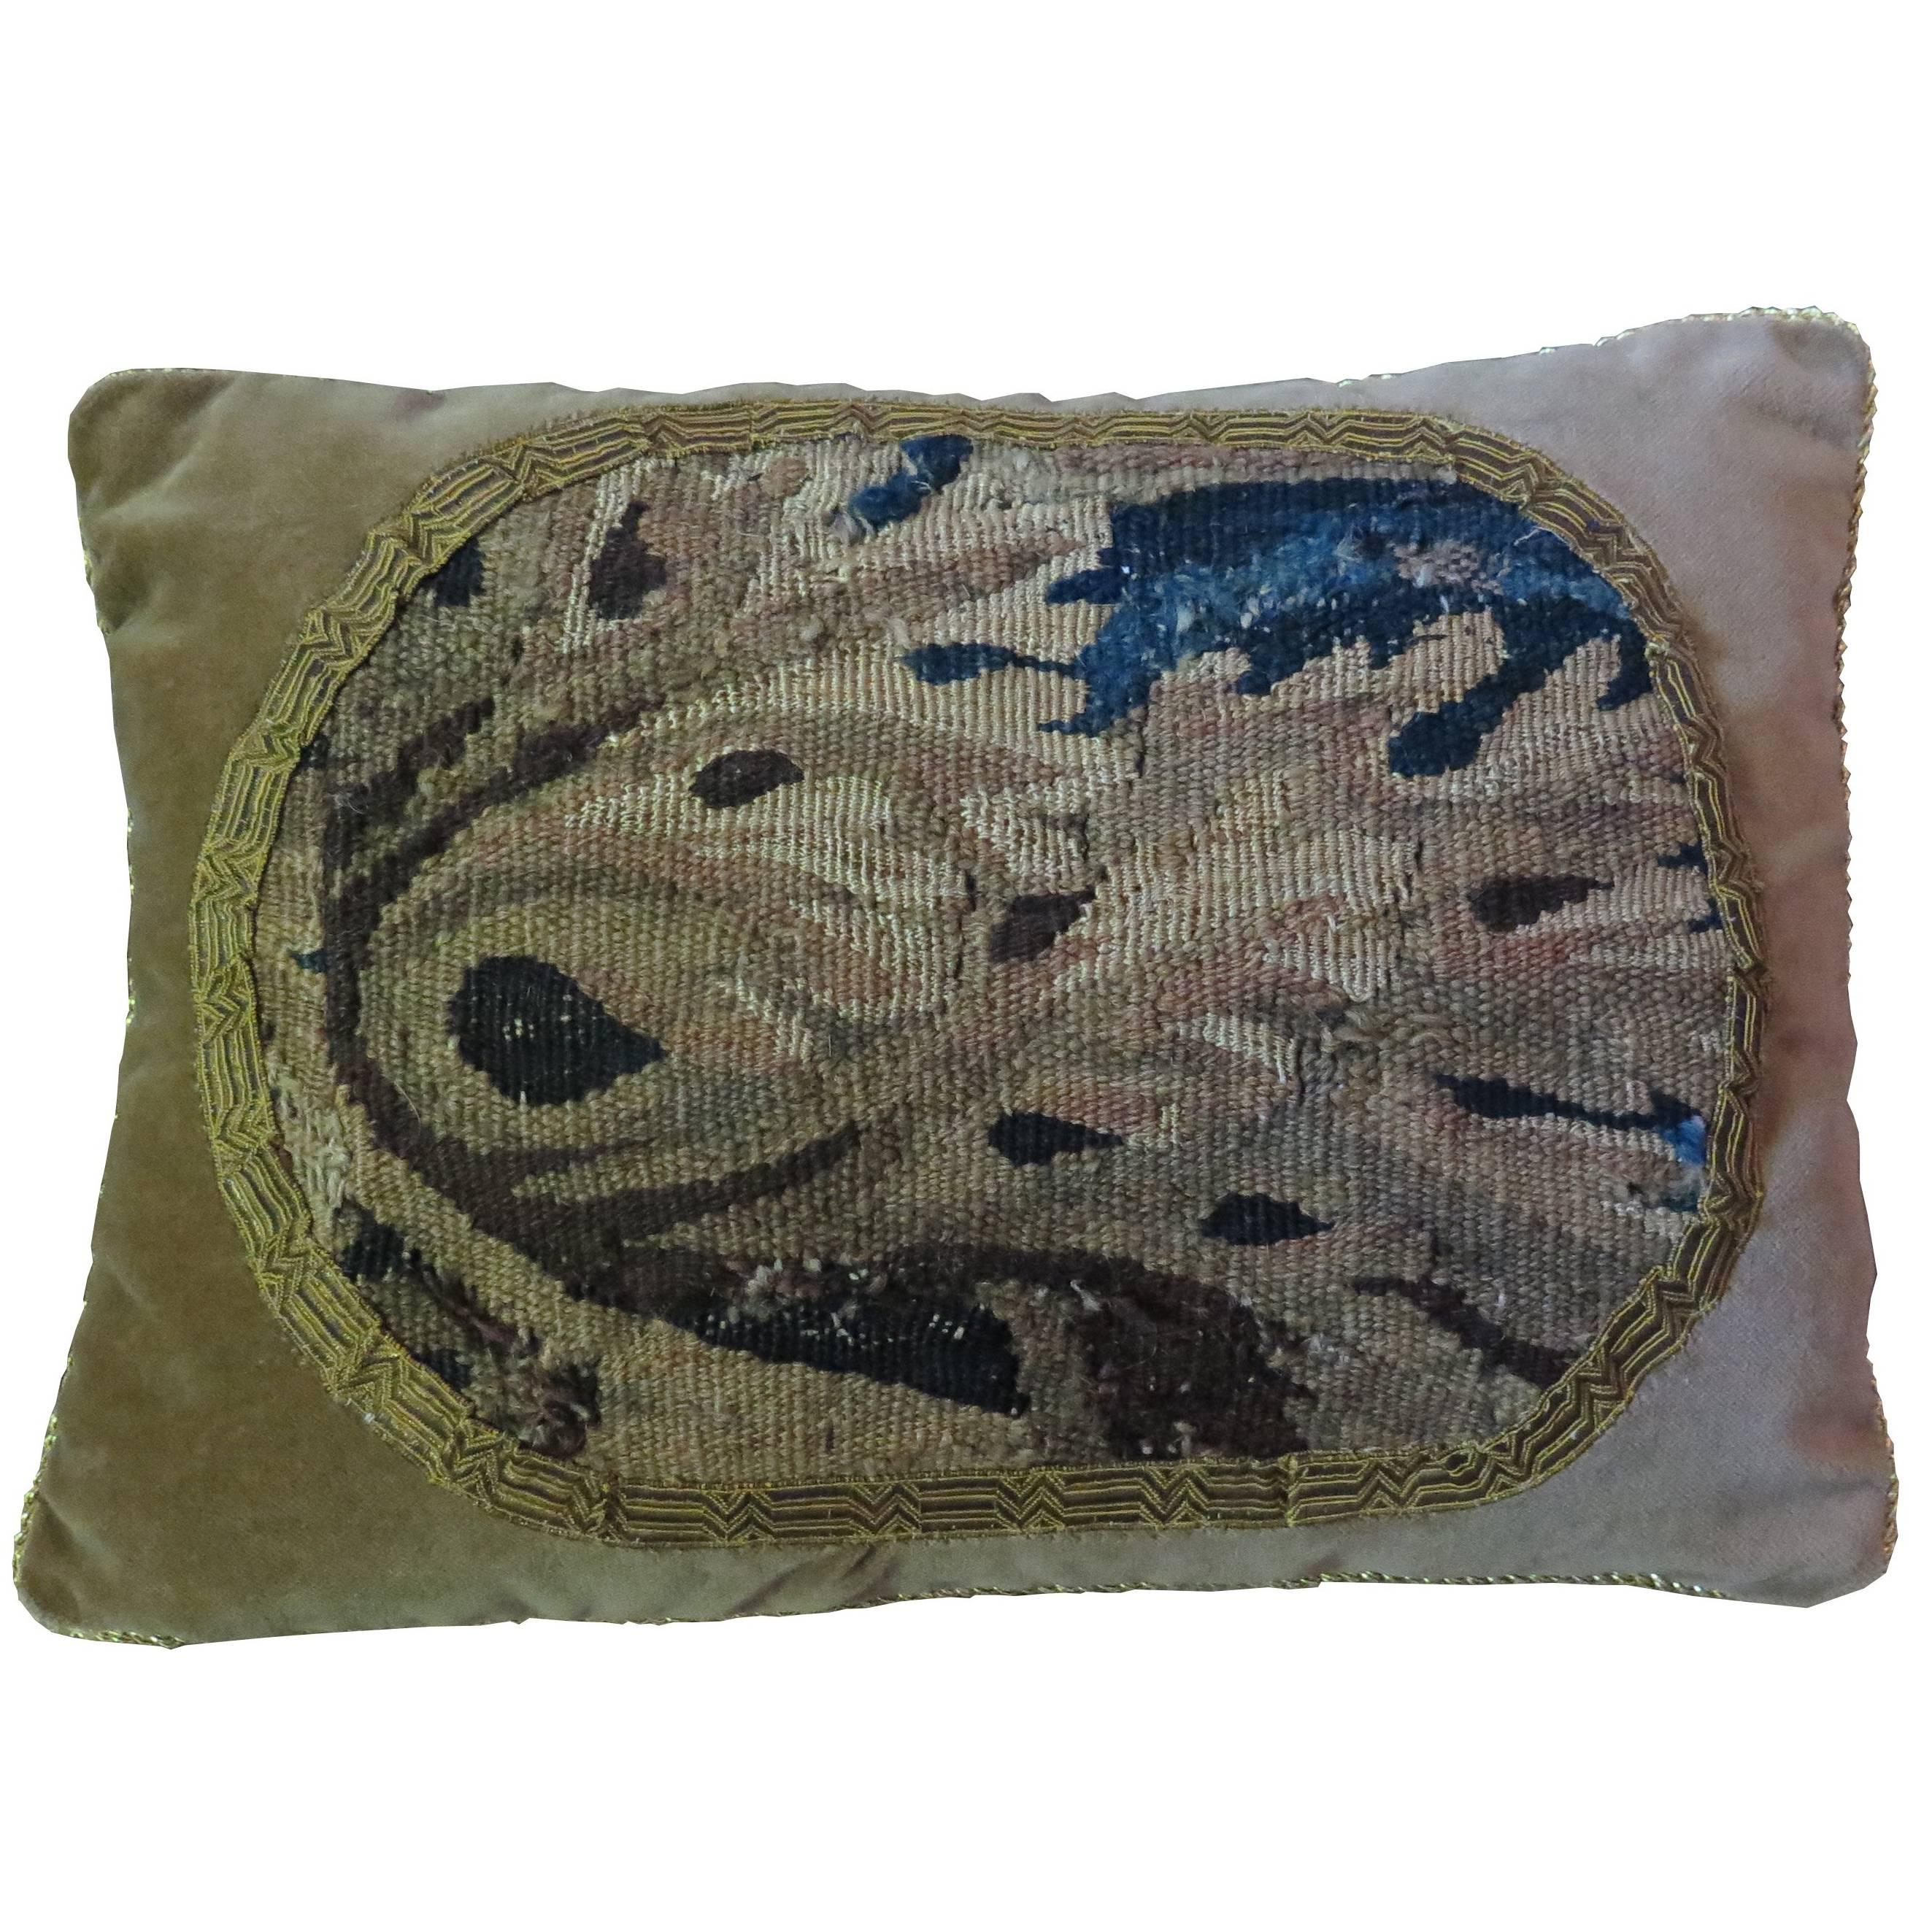 Maison Maison 18th Century Tapestry Pillow